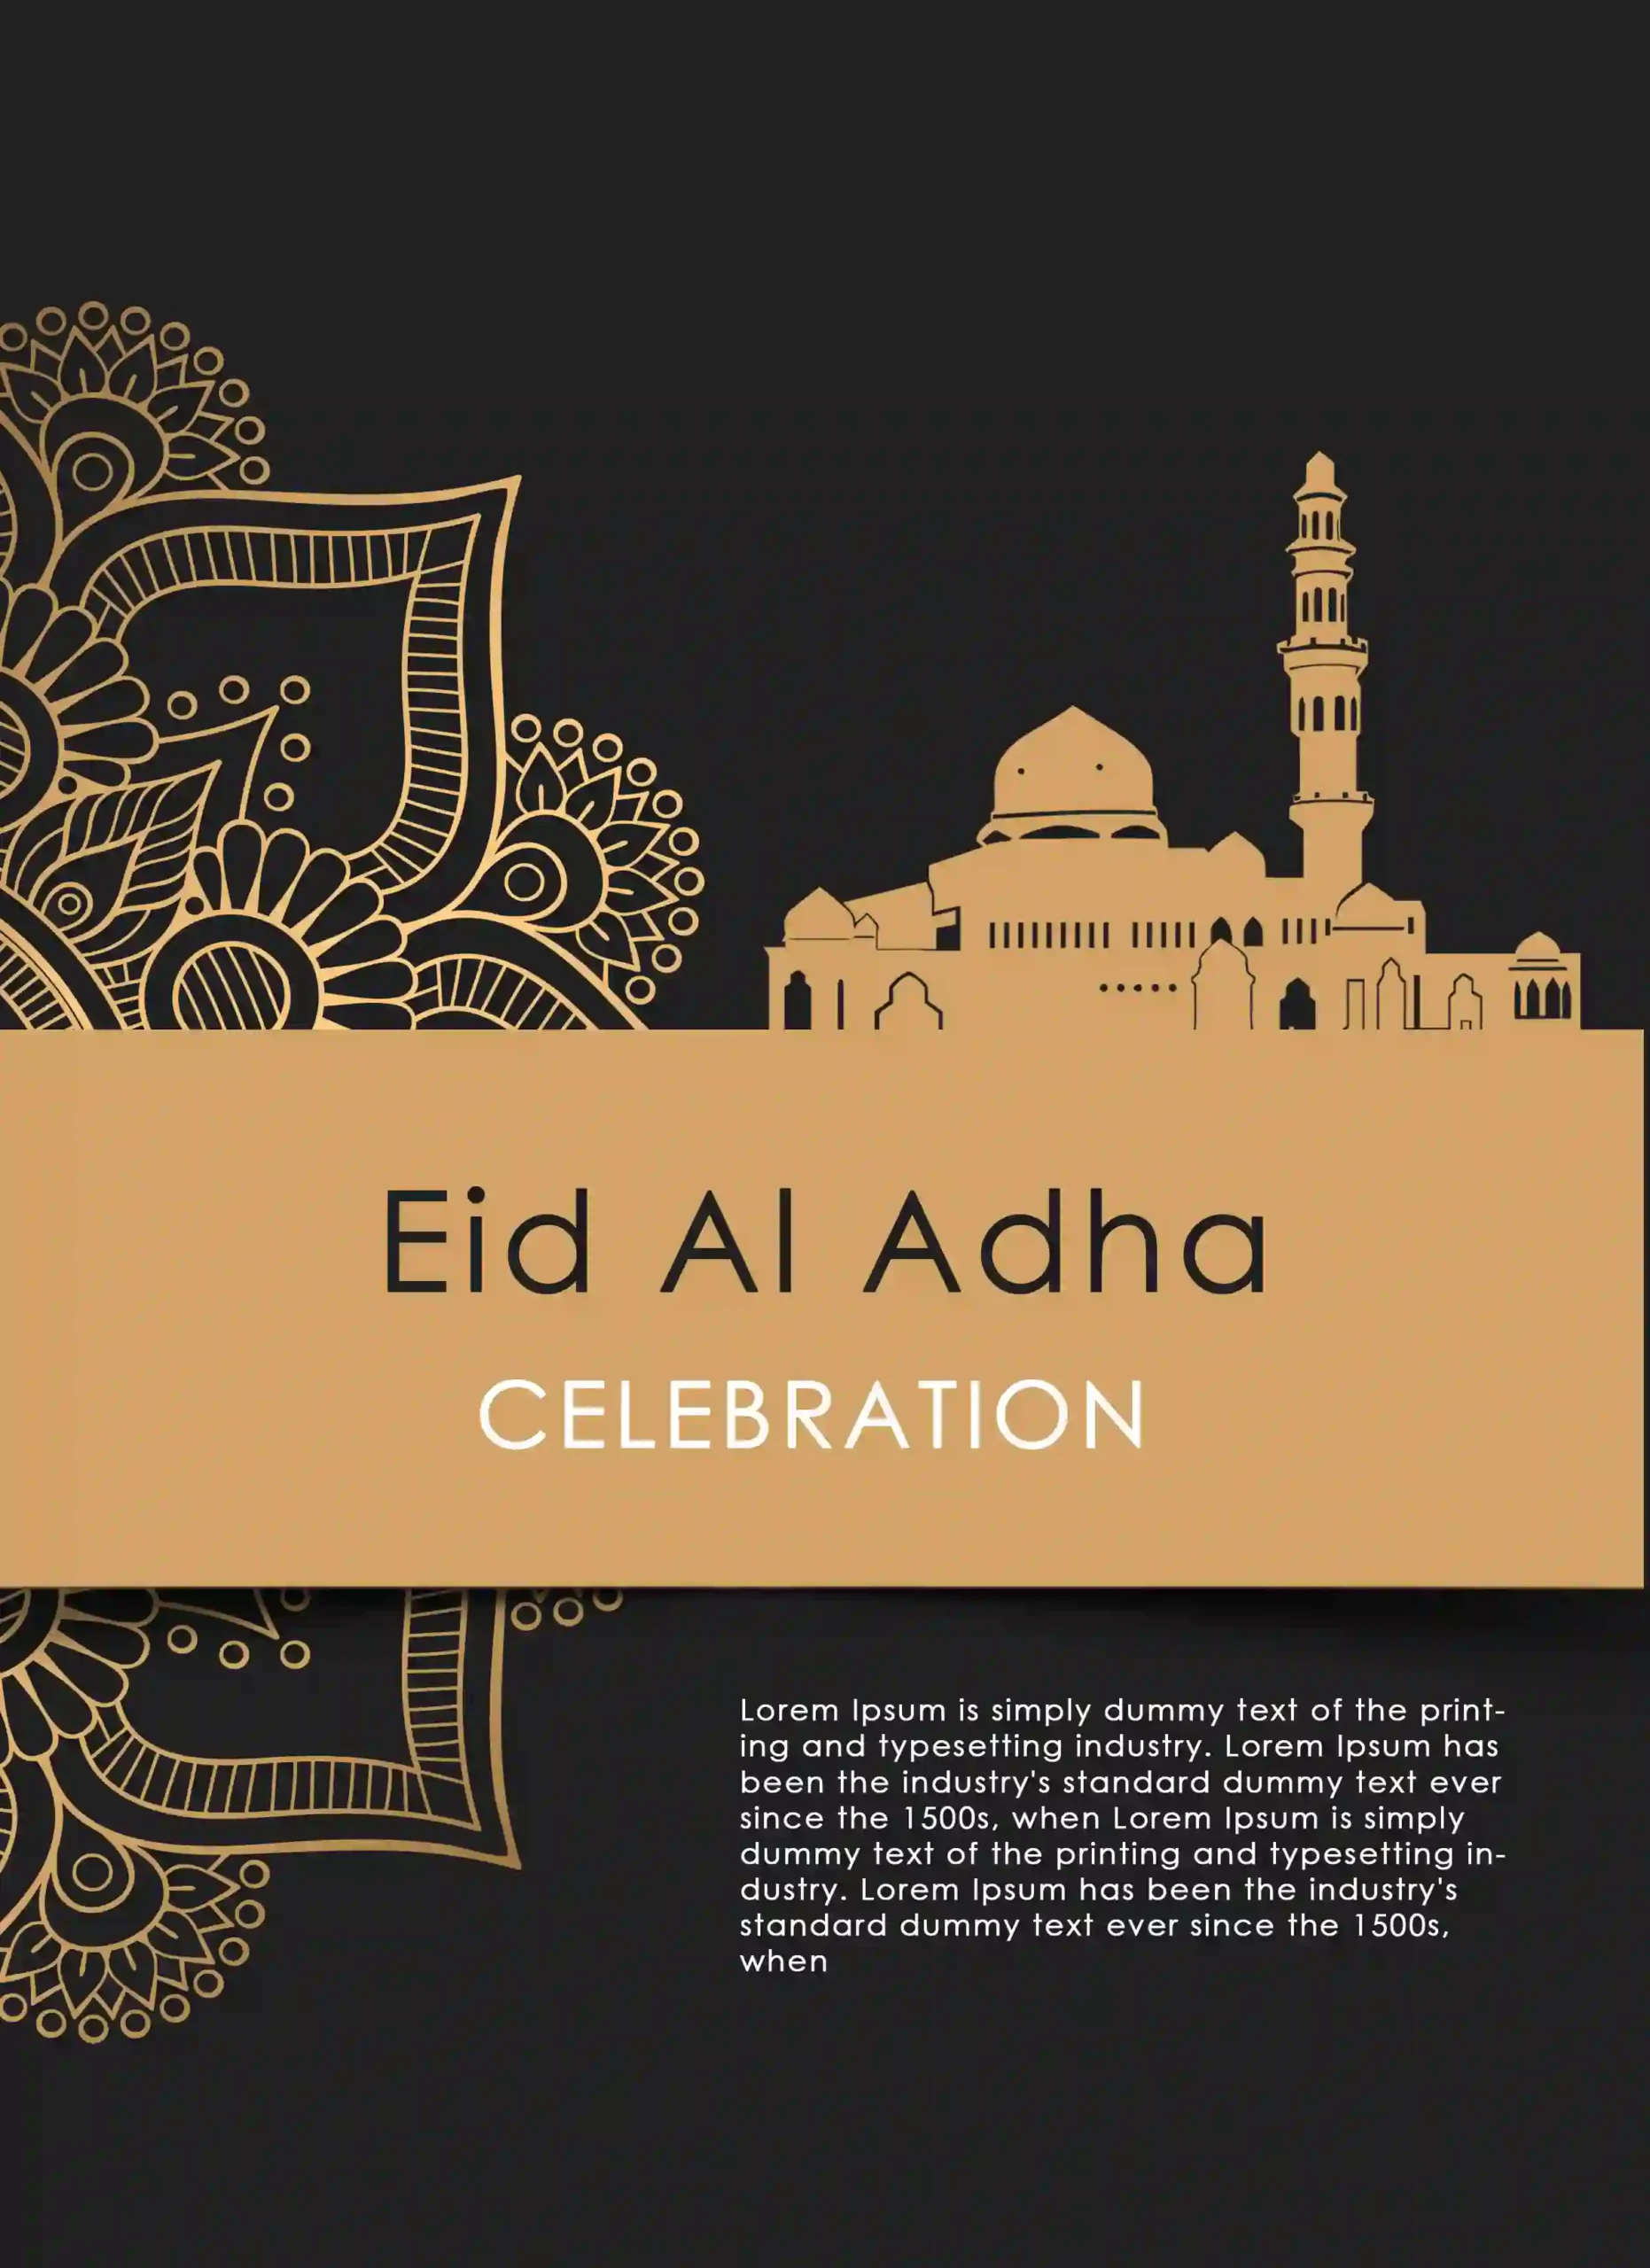 Eid Al Adha Poster Design PSD Free Download